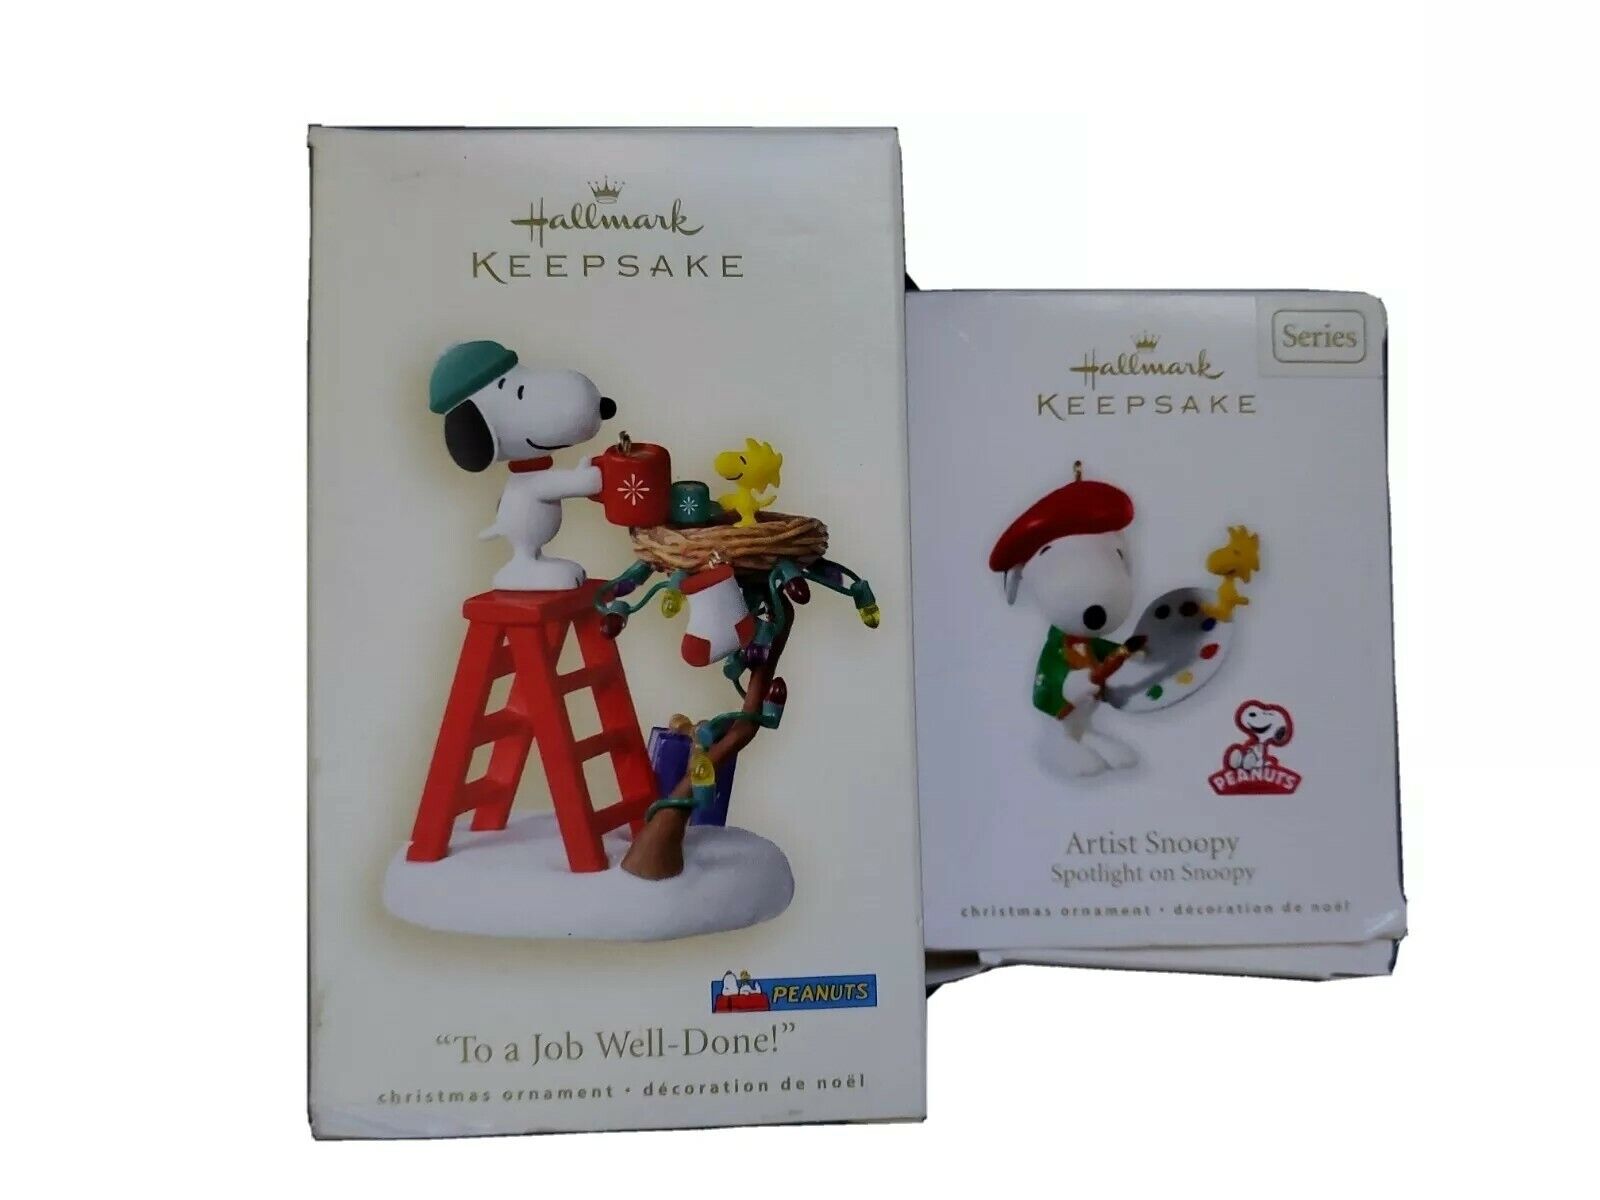 2007 Hallmark Keepsake Ornament Peanuts Snoopy & Woodstock “To a Job Well-Done”